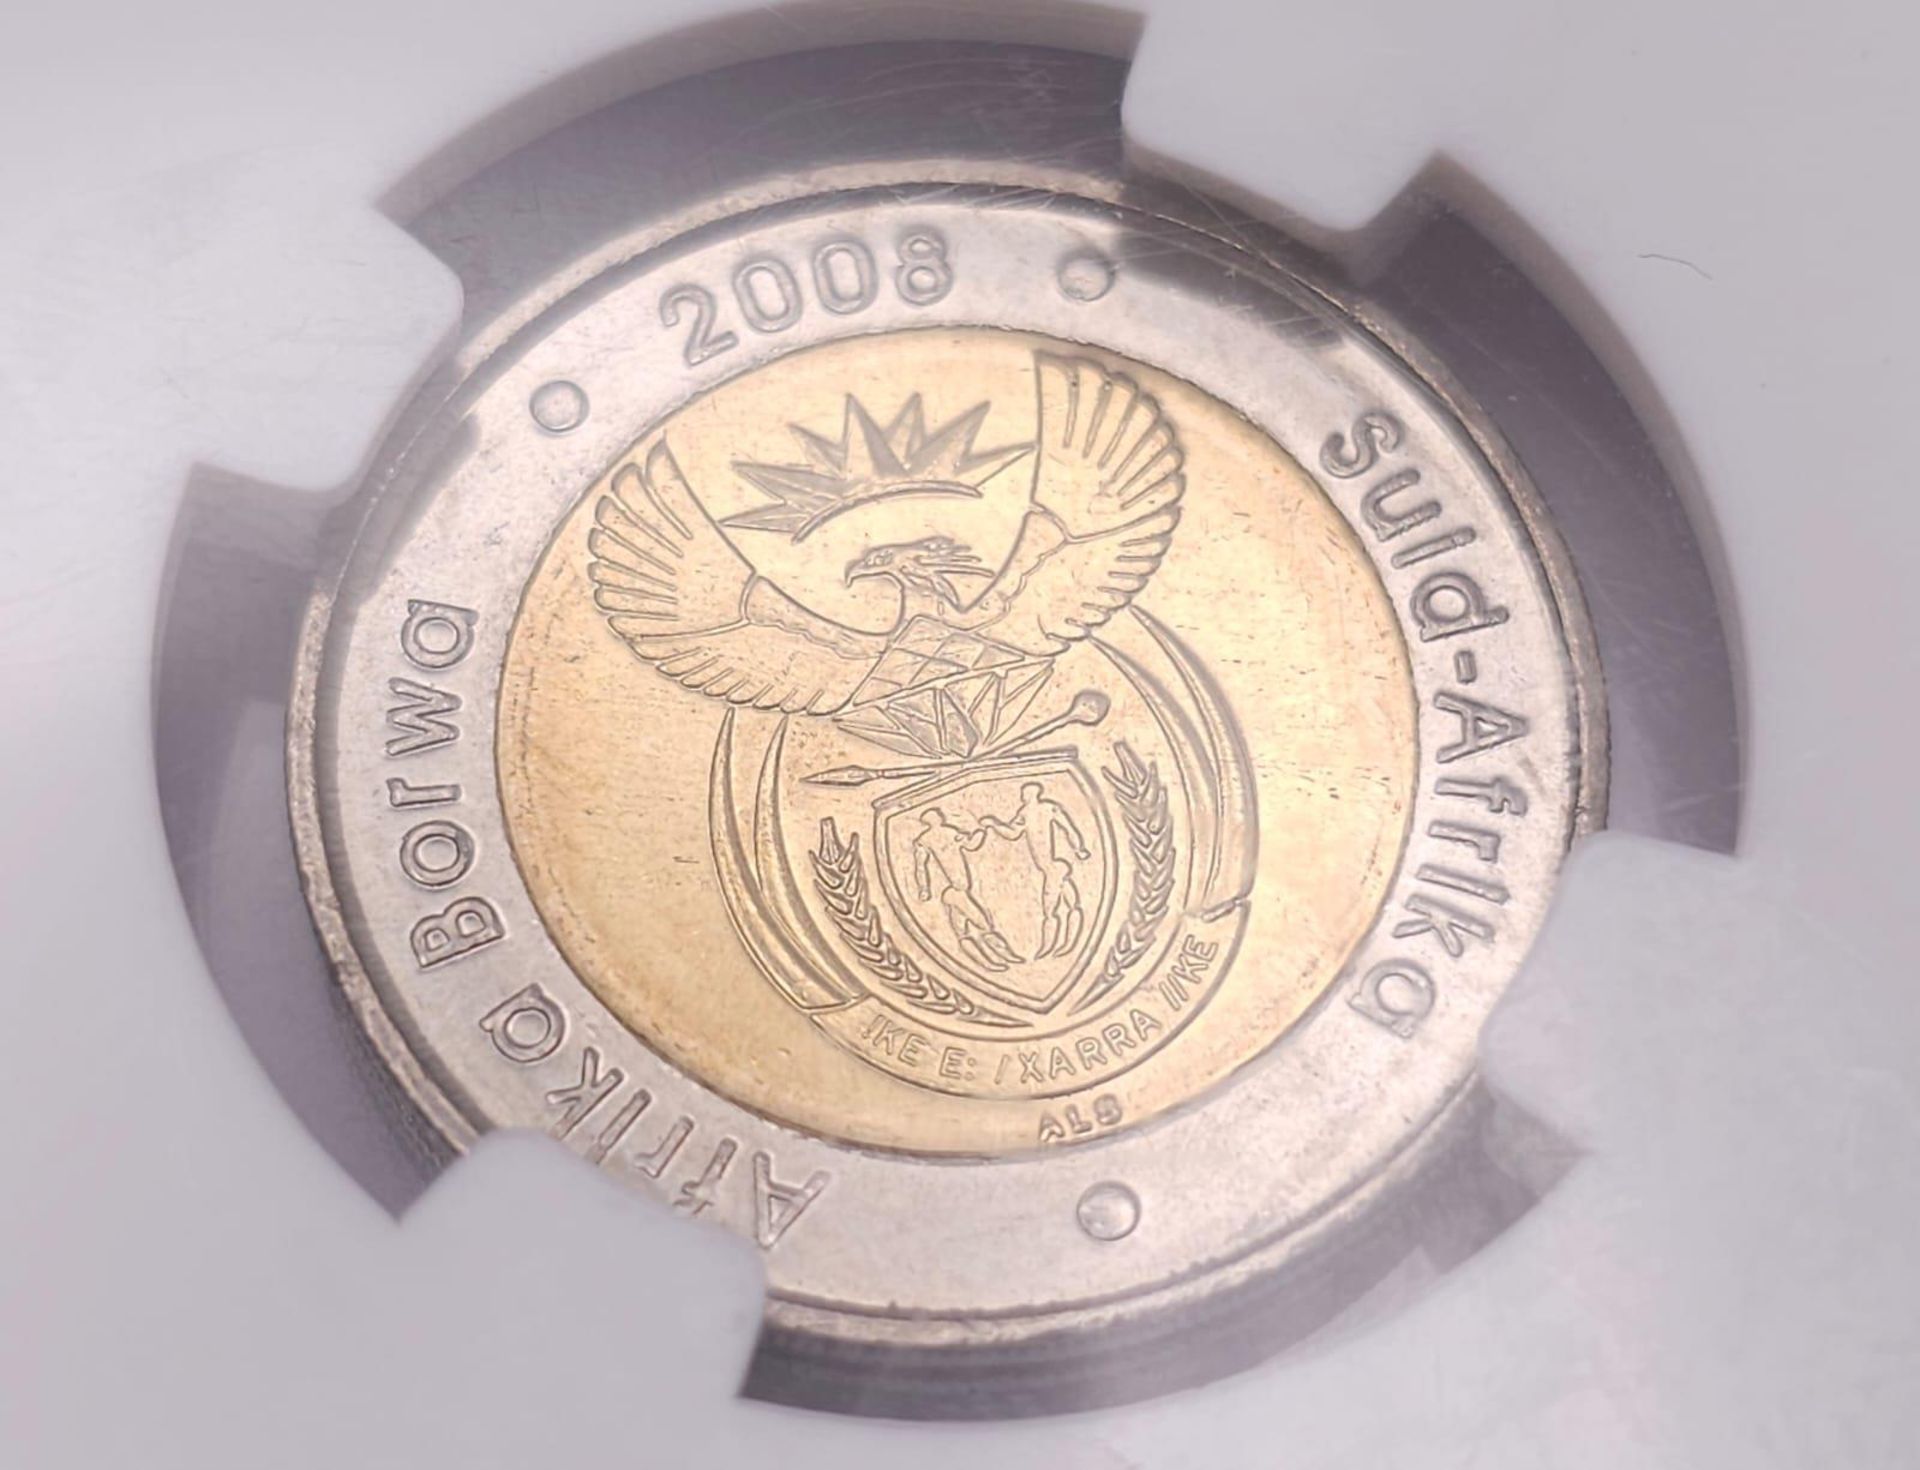 A 2008 MANDELA 90th BIRTHDAY COMMEMORATIVE COIN IN PRESENTATATION CAPSULE . - Image 9 of 9